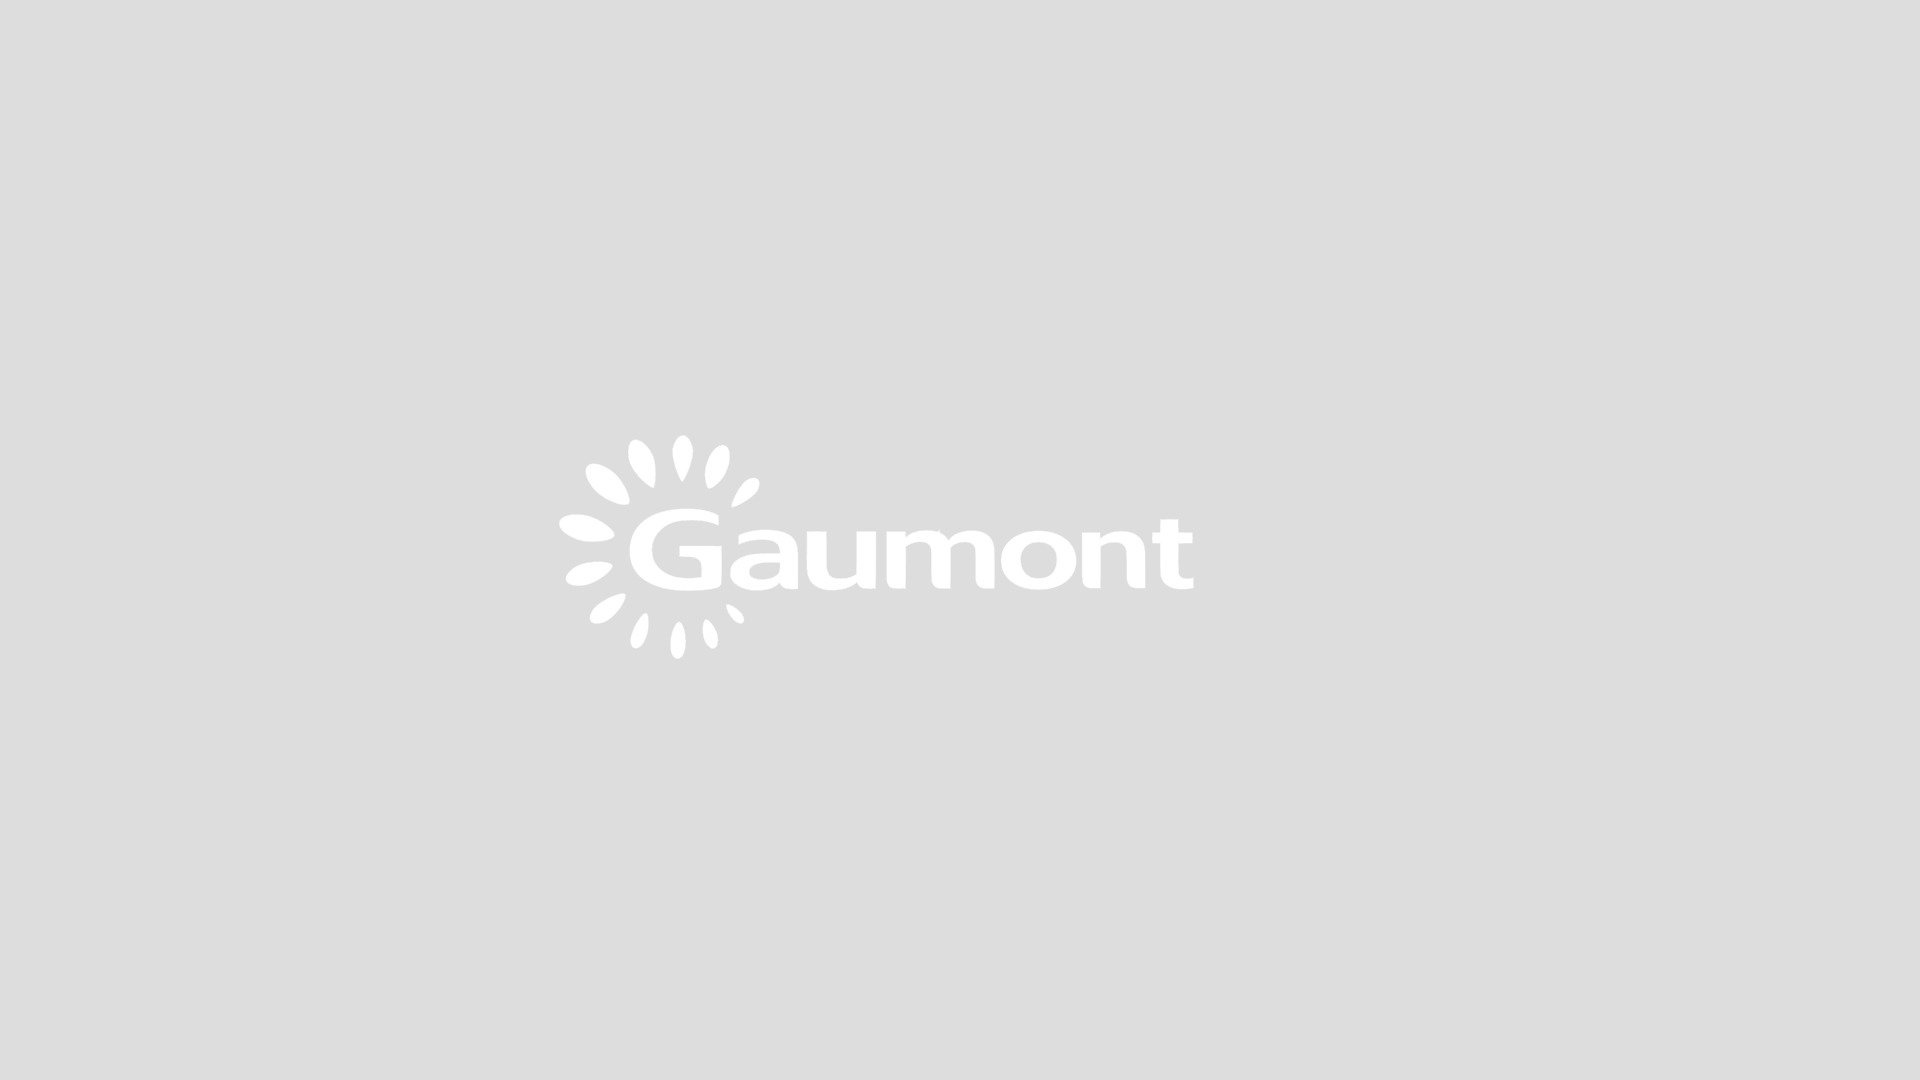 Gaumont, 2011 logo remake, Download 3D model, Animation, 1920x1080 Full HD Desktop